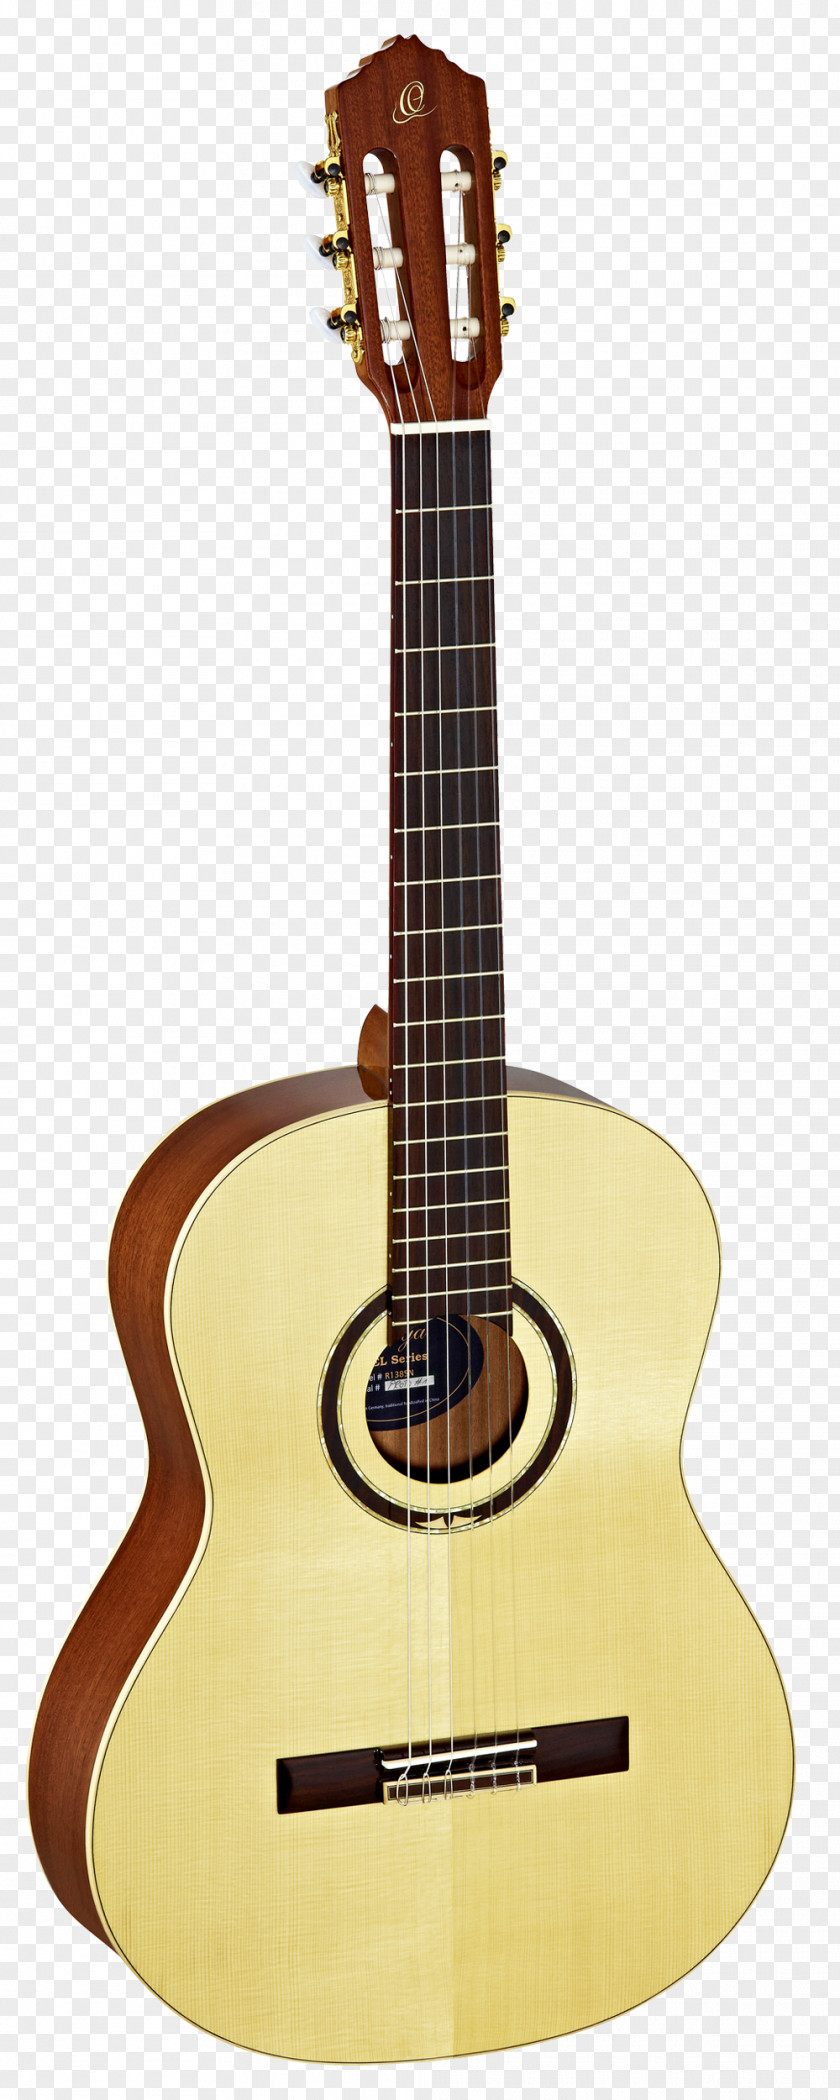 Amancio Ortega Twelve-string Guitar Ukulele Classical Musical Instruments PNG